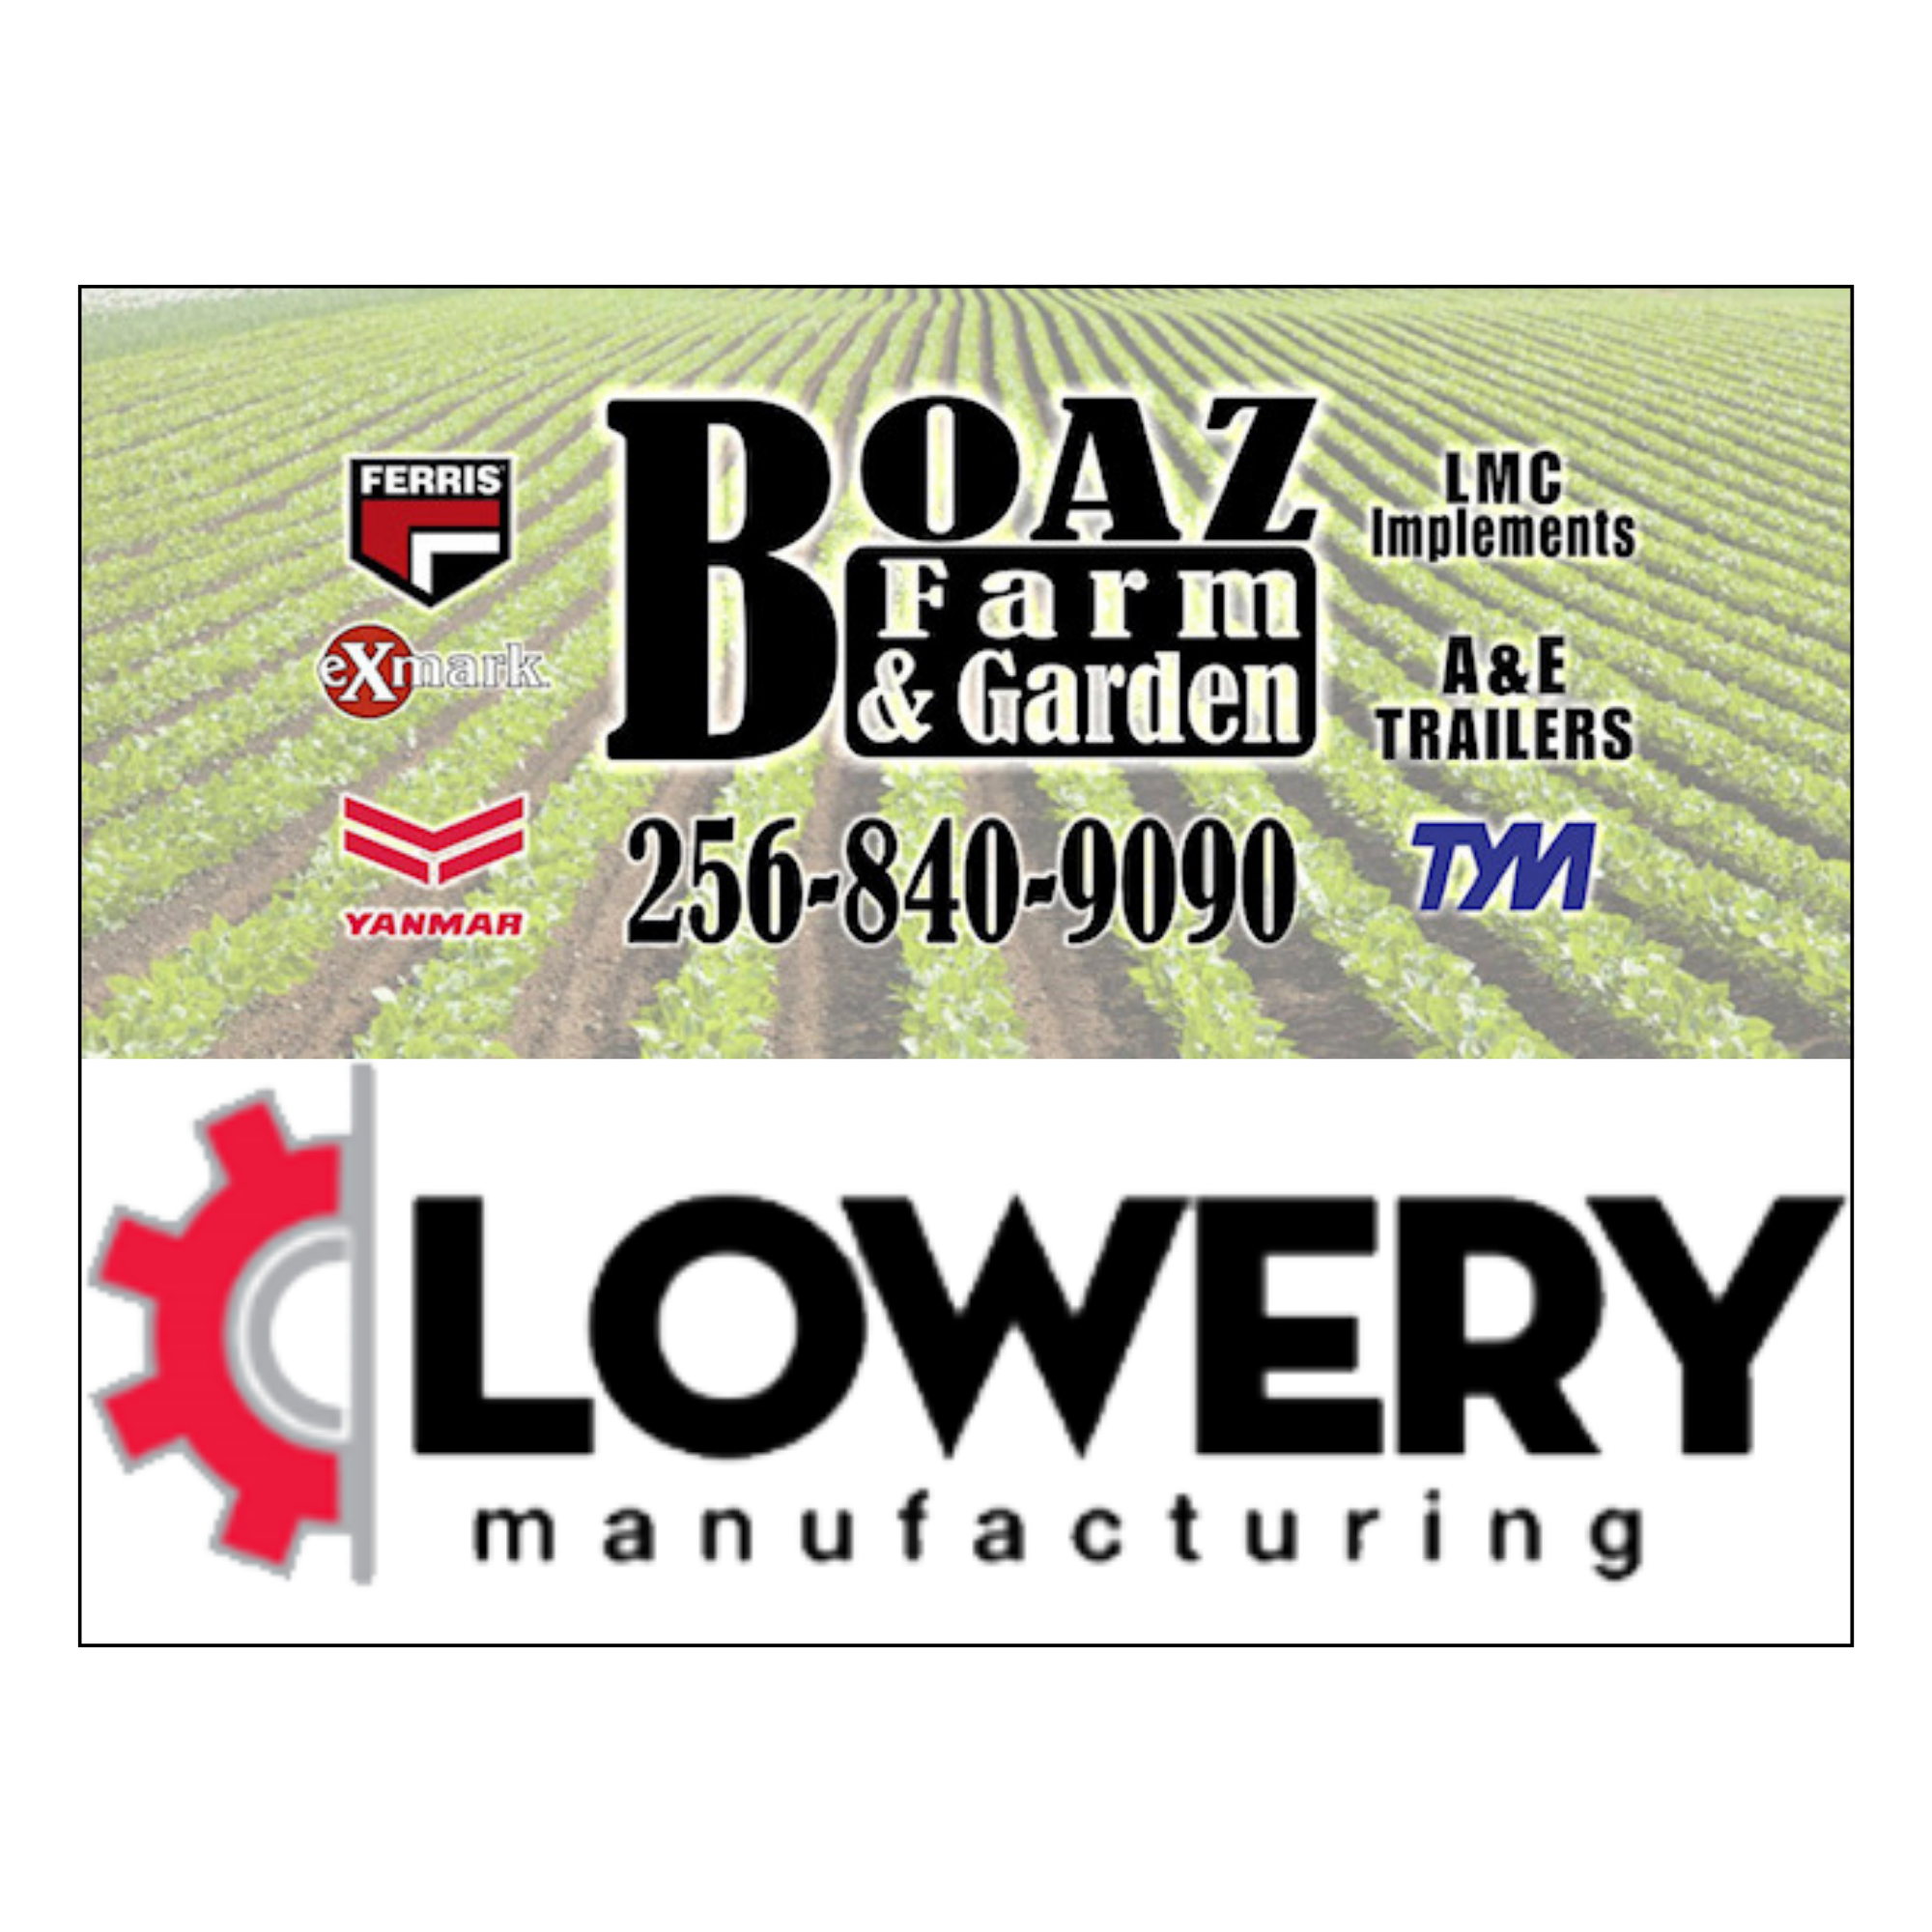 Lowery Manufacturing/Boaz Farm & Garden